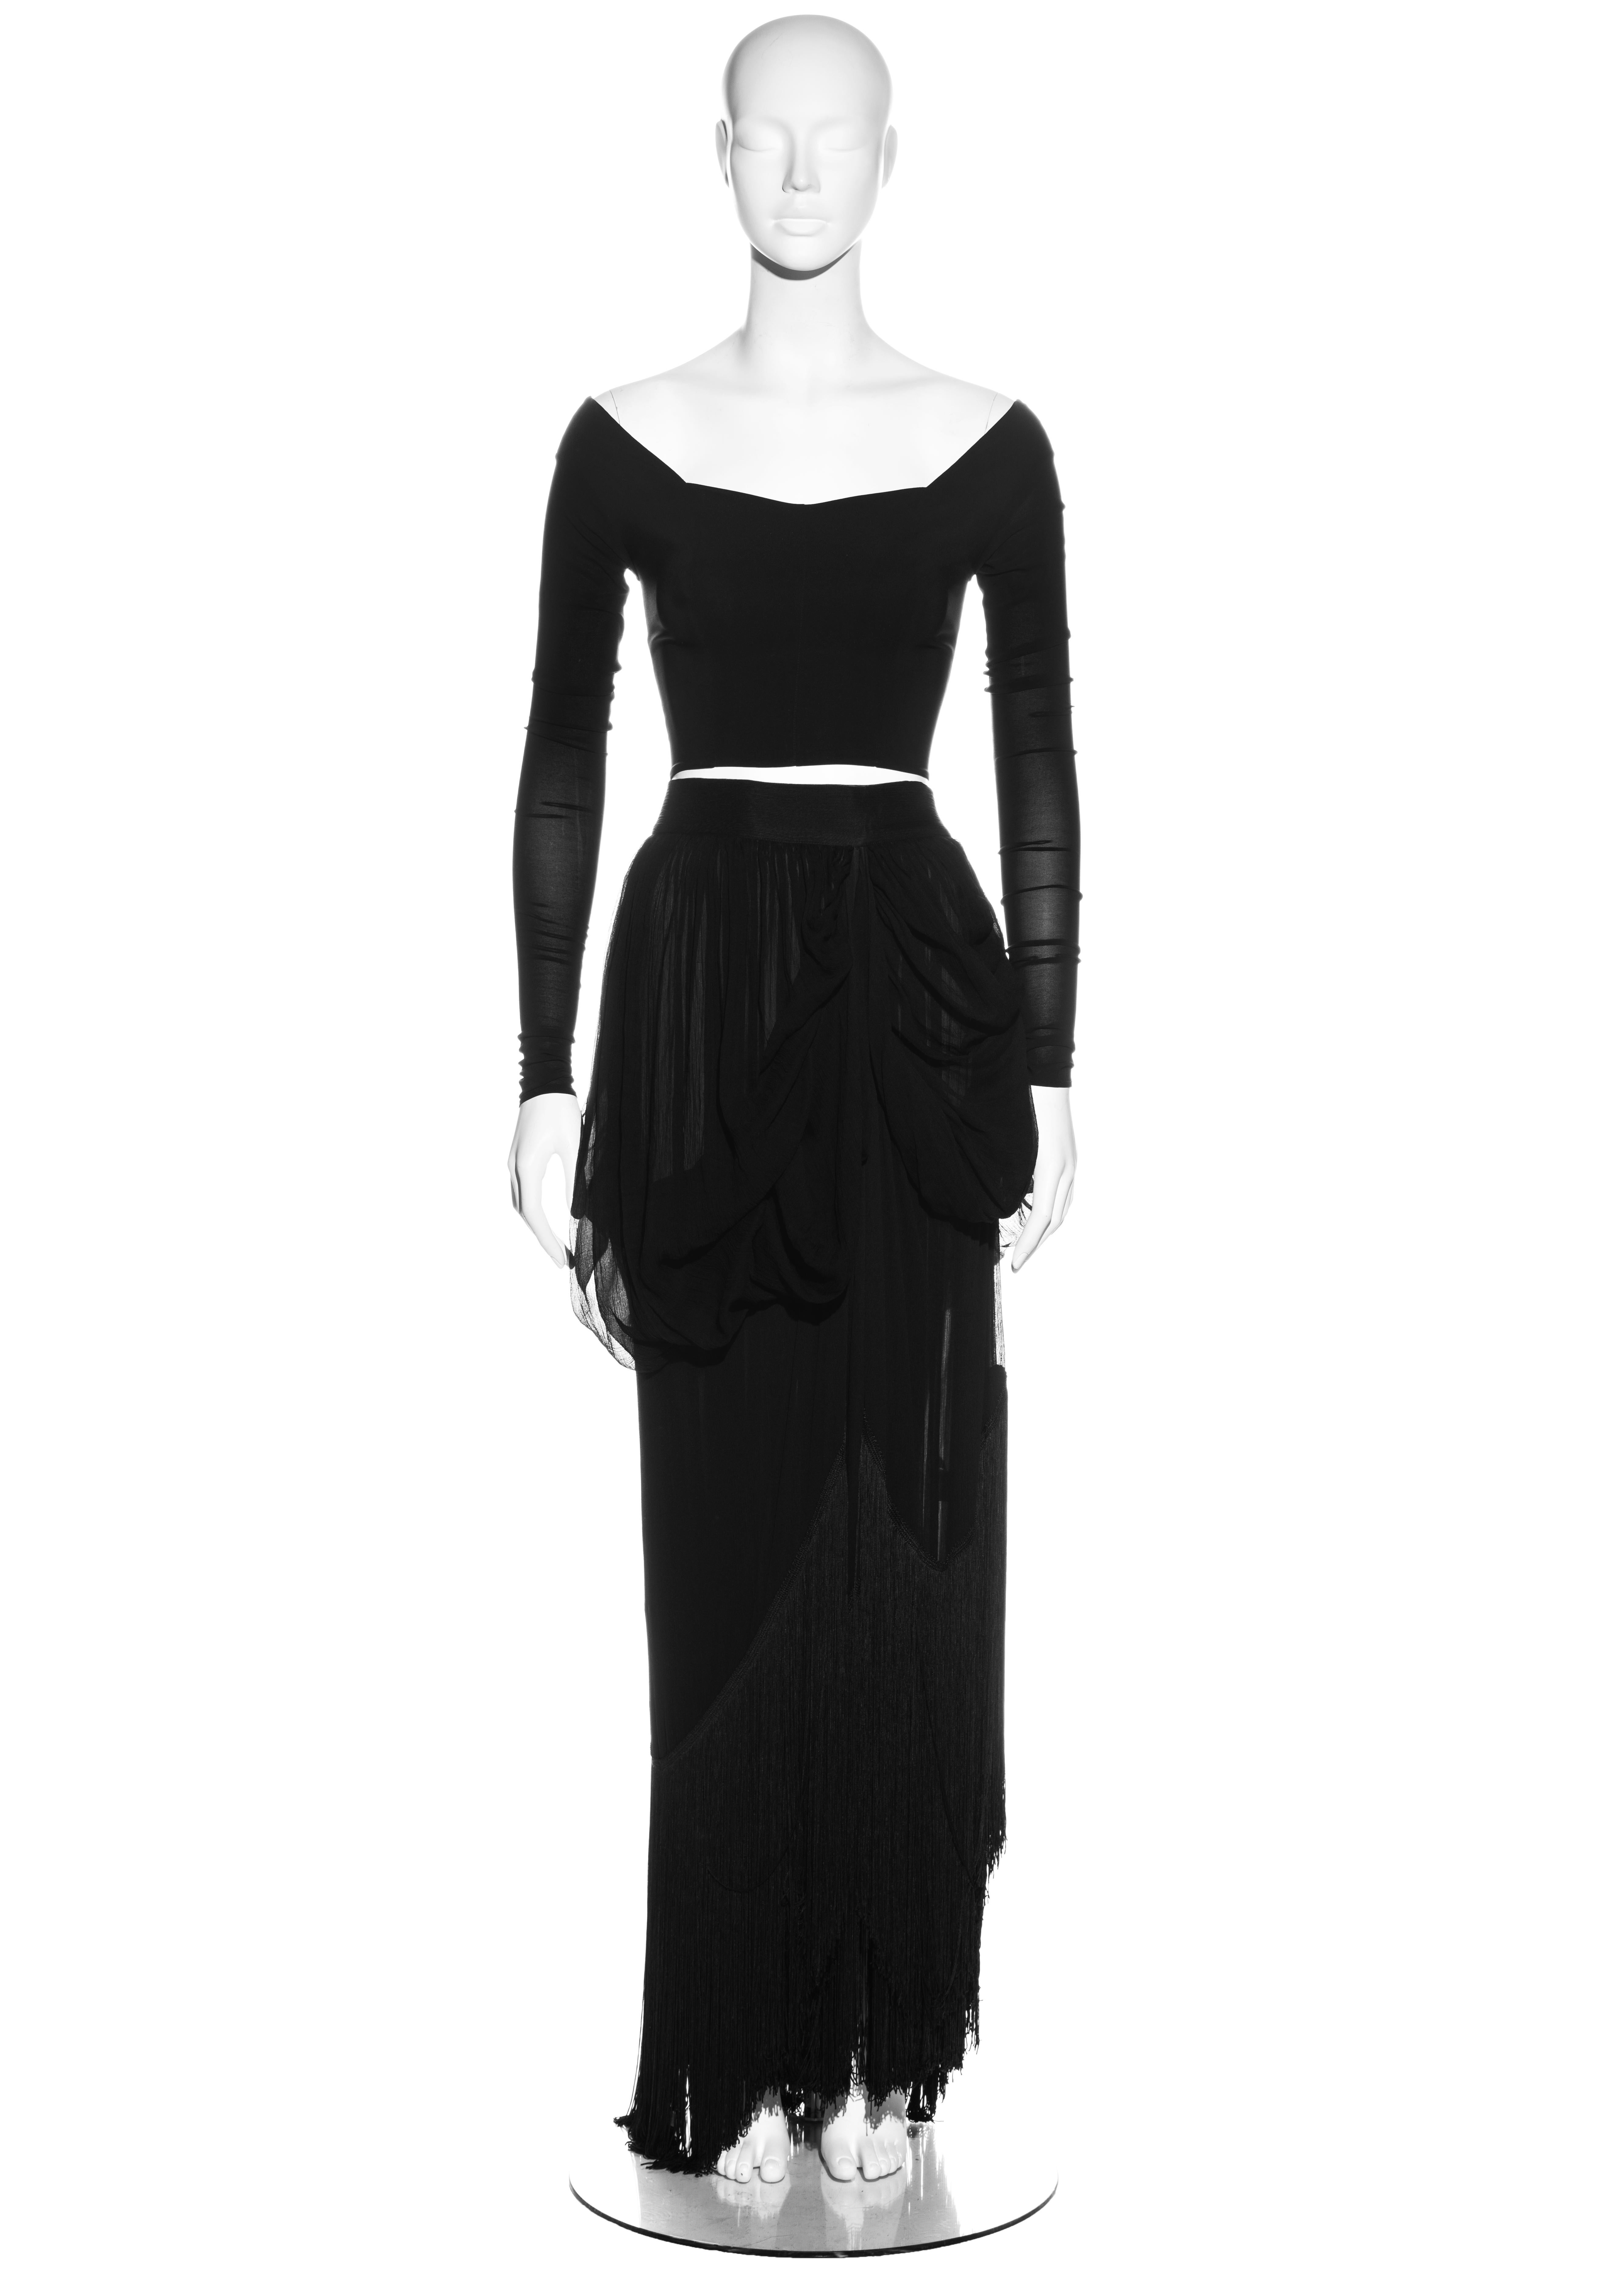 ▪ Dolce & Gabbana black skirt and top set
▪ 100% Silk
▪ Fitted long sleeve top 
▪ Maxi bustled skirt 
▪ Long fringed trim around hemline 
▪ IT 40 - FR 36 - UK 8 - US 4
▪ Fall-Winter 1993